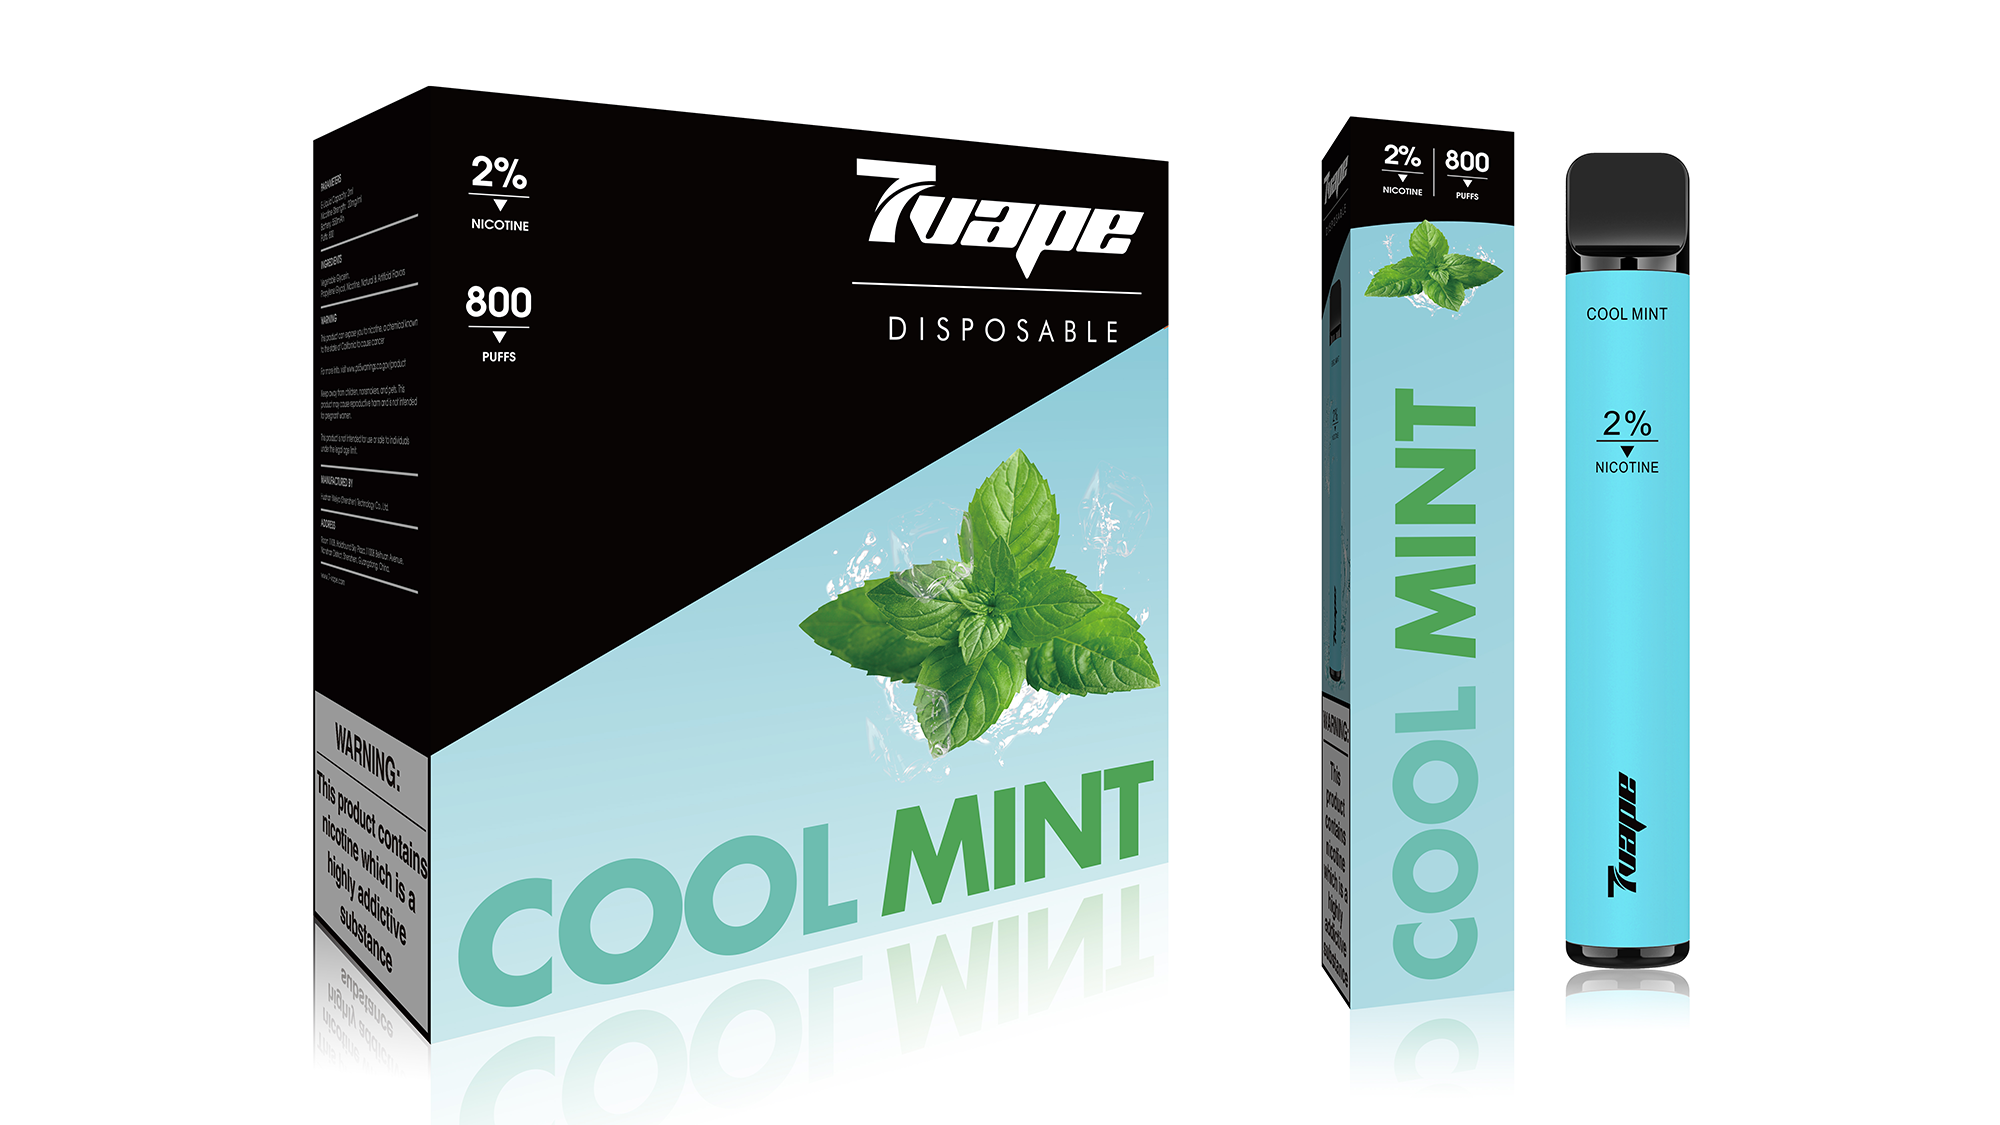 7VAPE disposable vape, cool mint vape, 800 puffs, 2% nicotine, 7-VAPE BAR